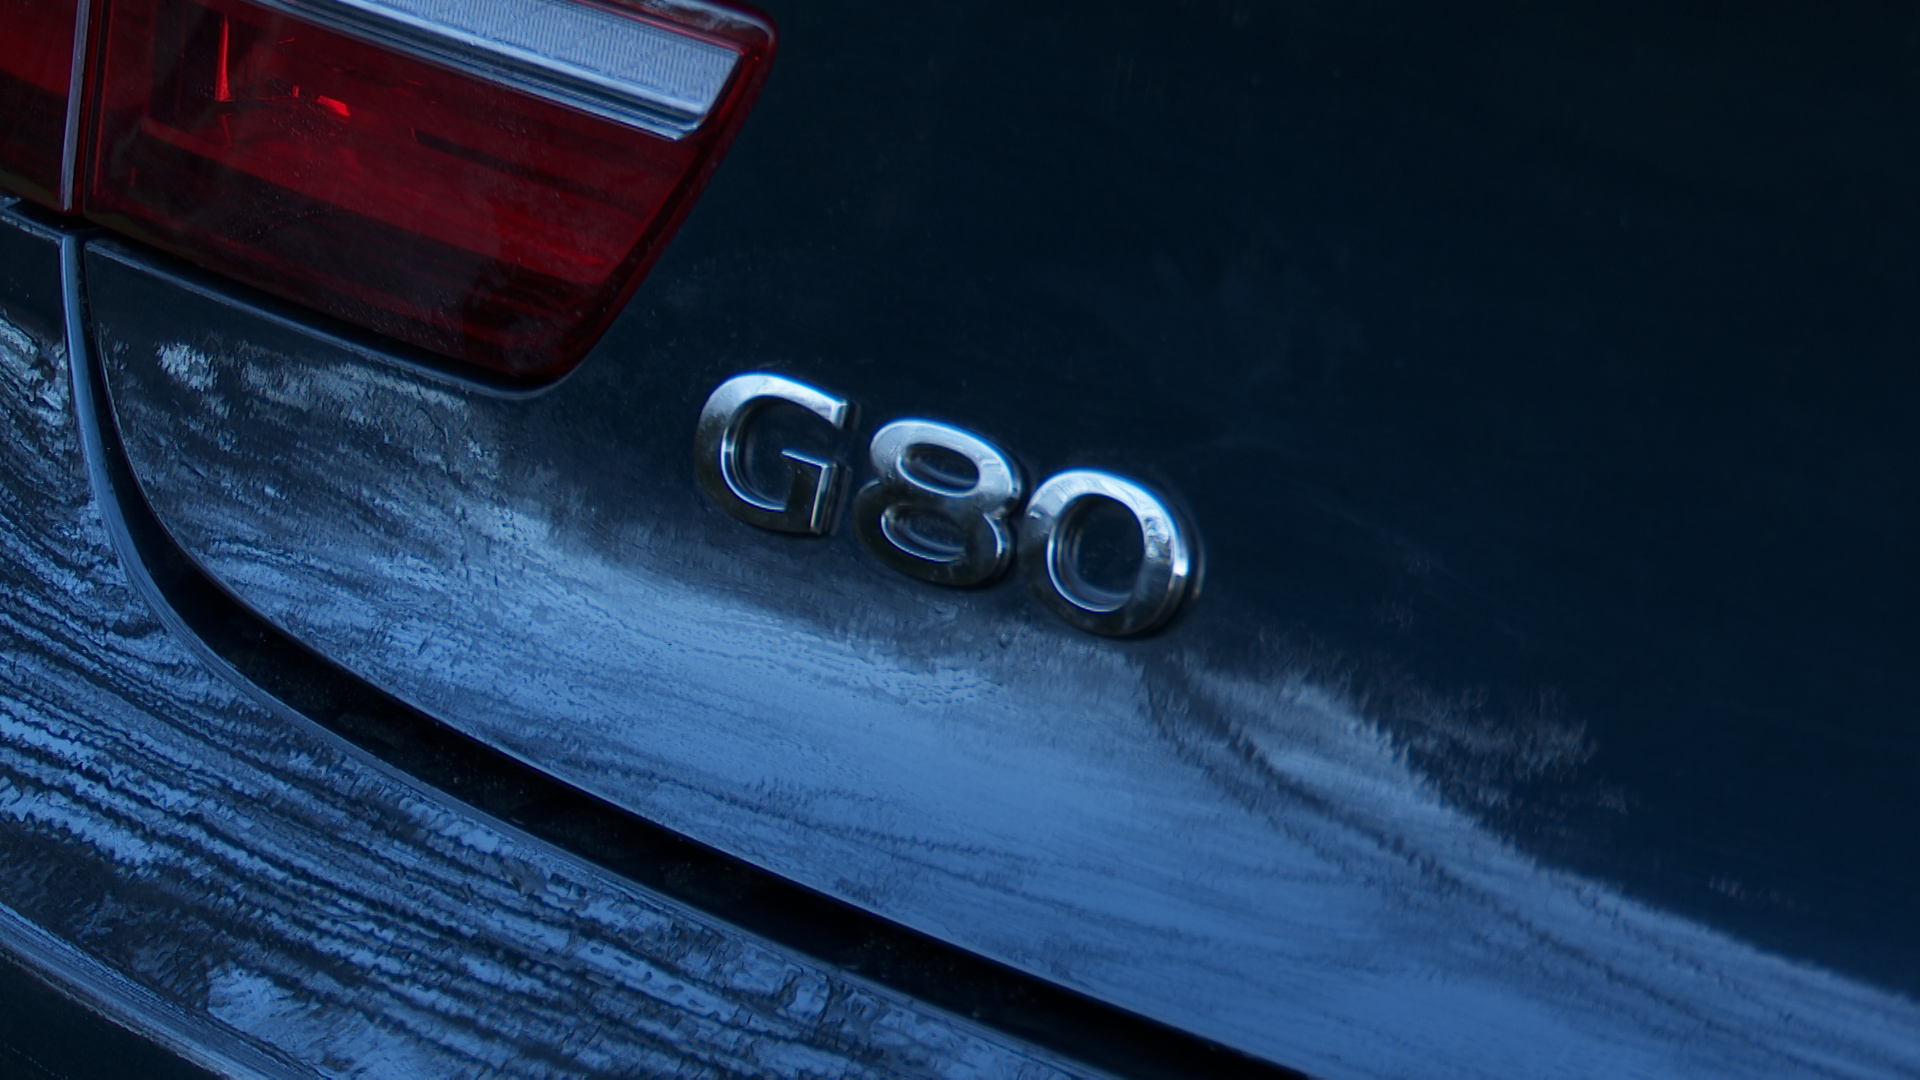 GENESIS G80 SALOON 2.5T Premium Line 4dr Auto AWD